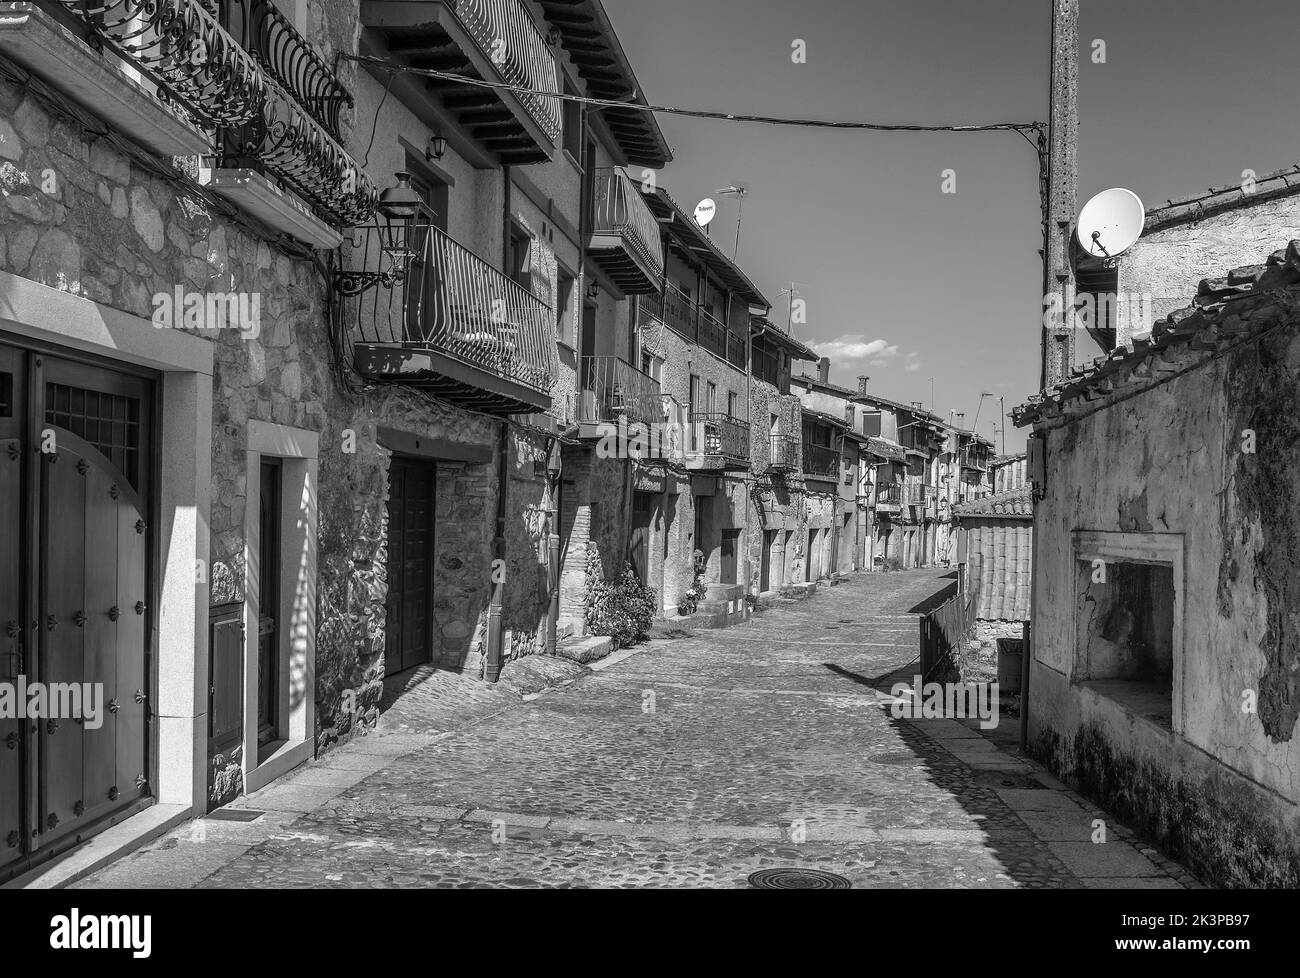 the historic village center of Miranda del castanar, Salamanca, Castile and Leon, Spain Stock Photo